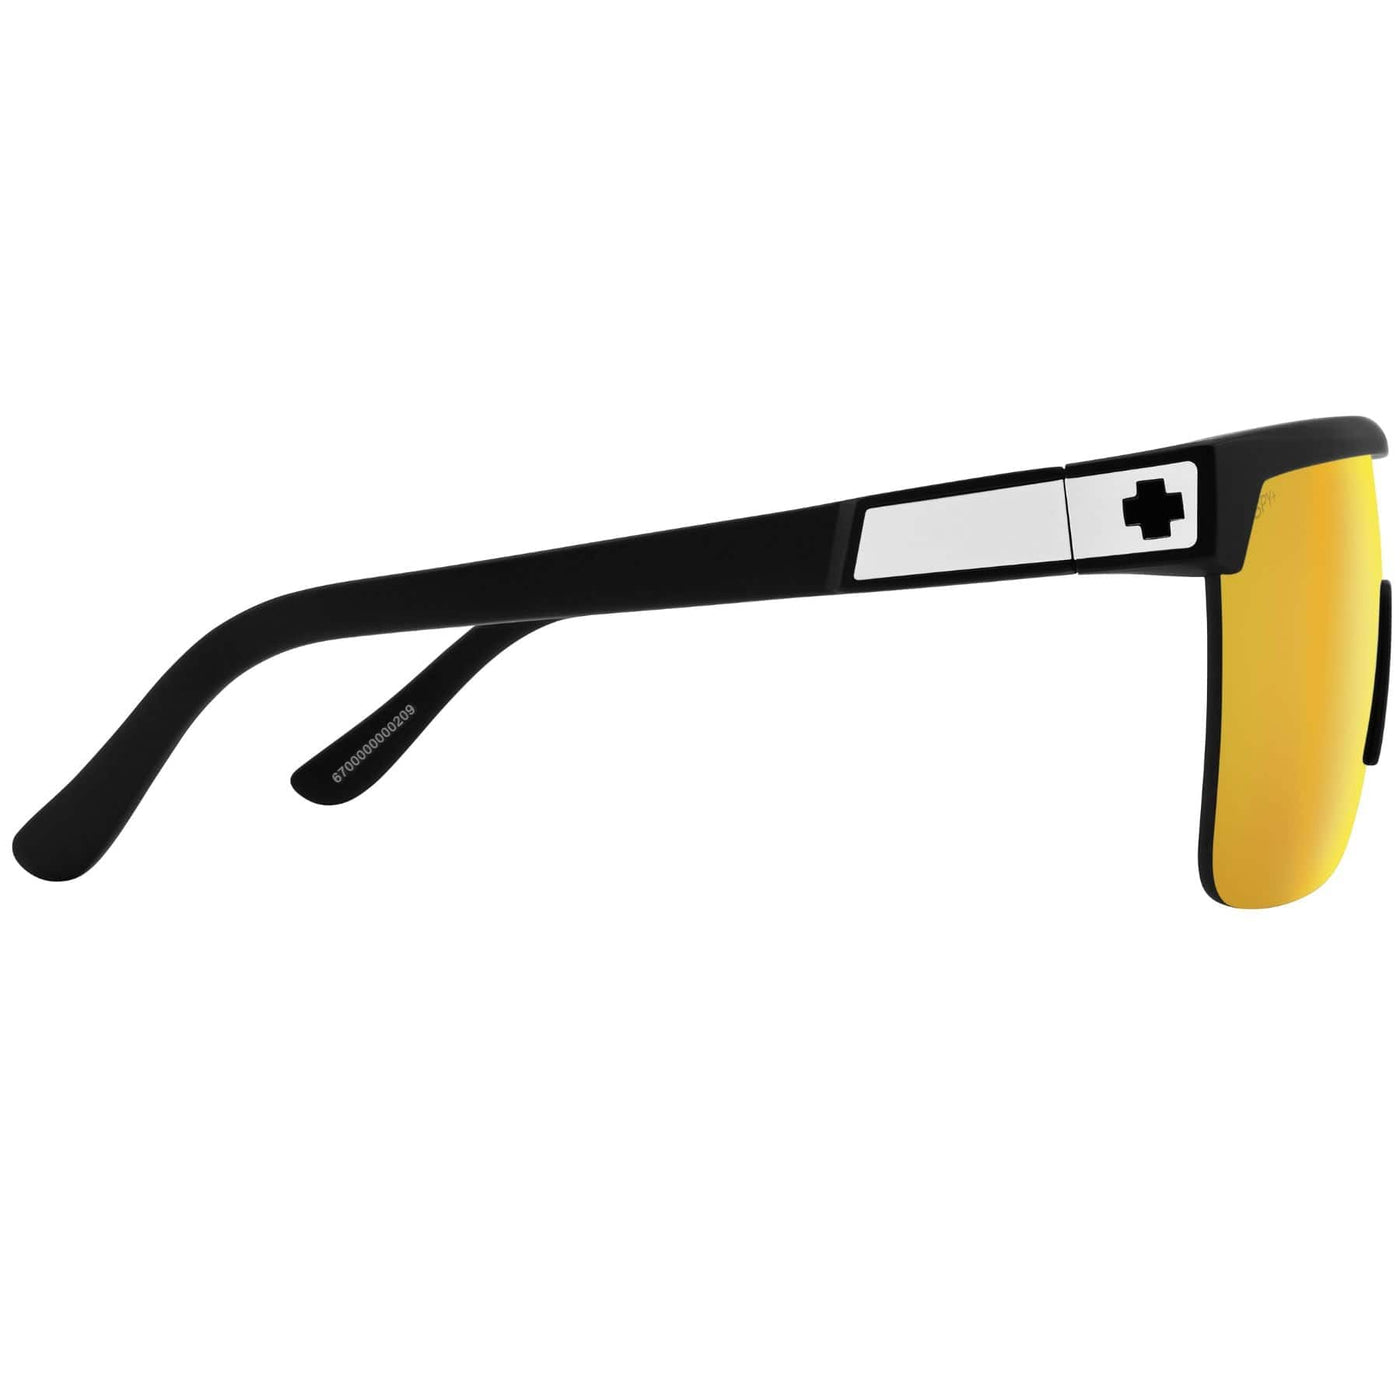 FLYNN 5050 Polarized Sunglasses, Happy BOOST - Orange 8Lines Shop - Fast Shipping